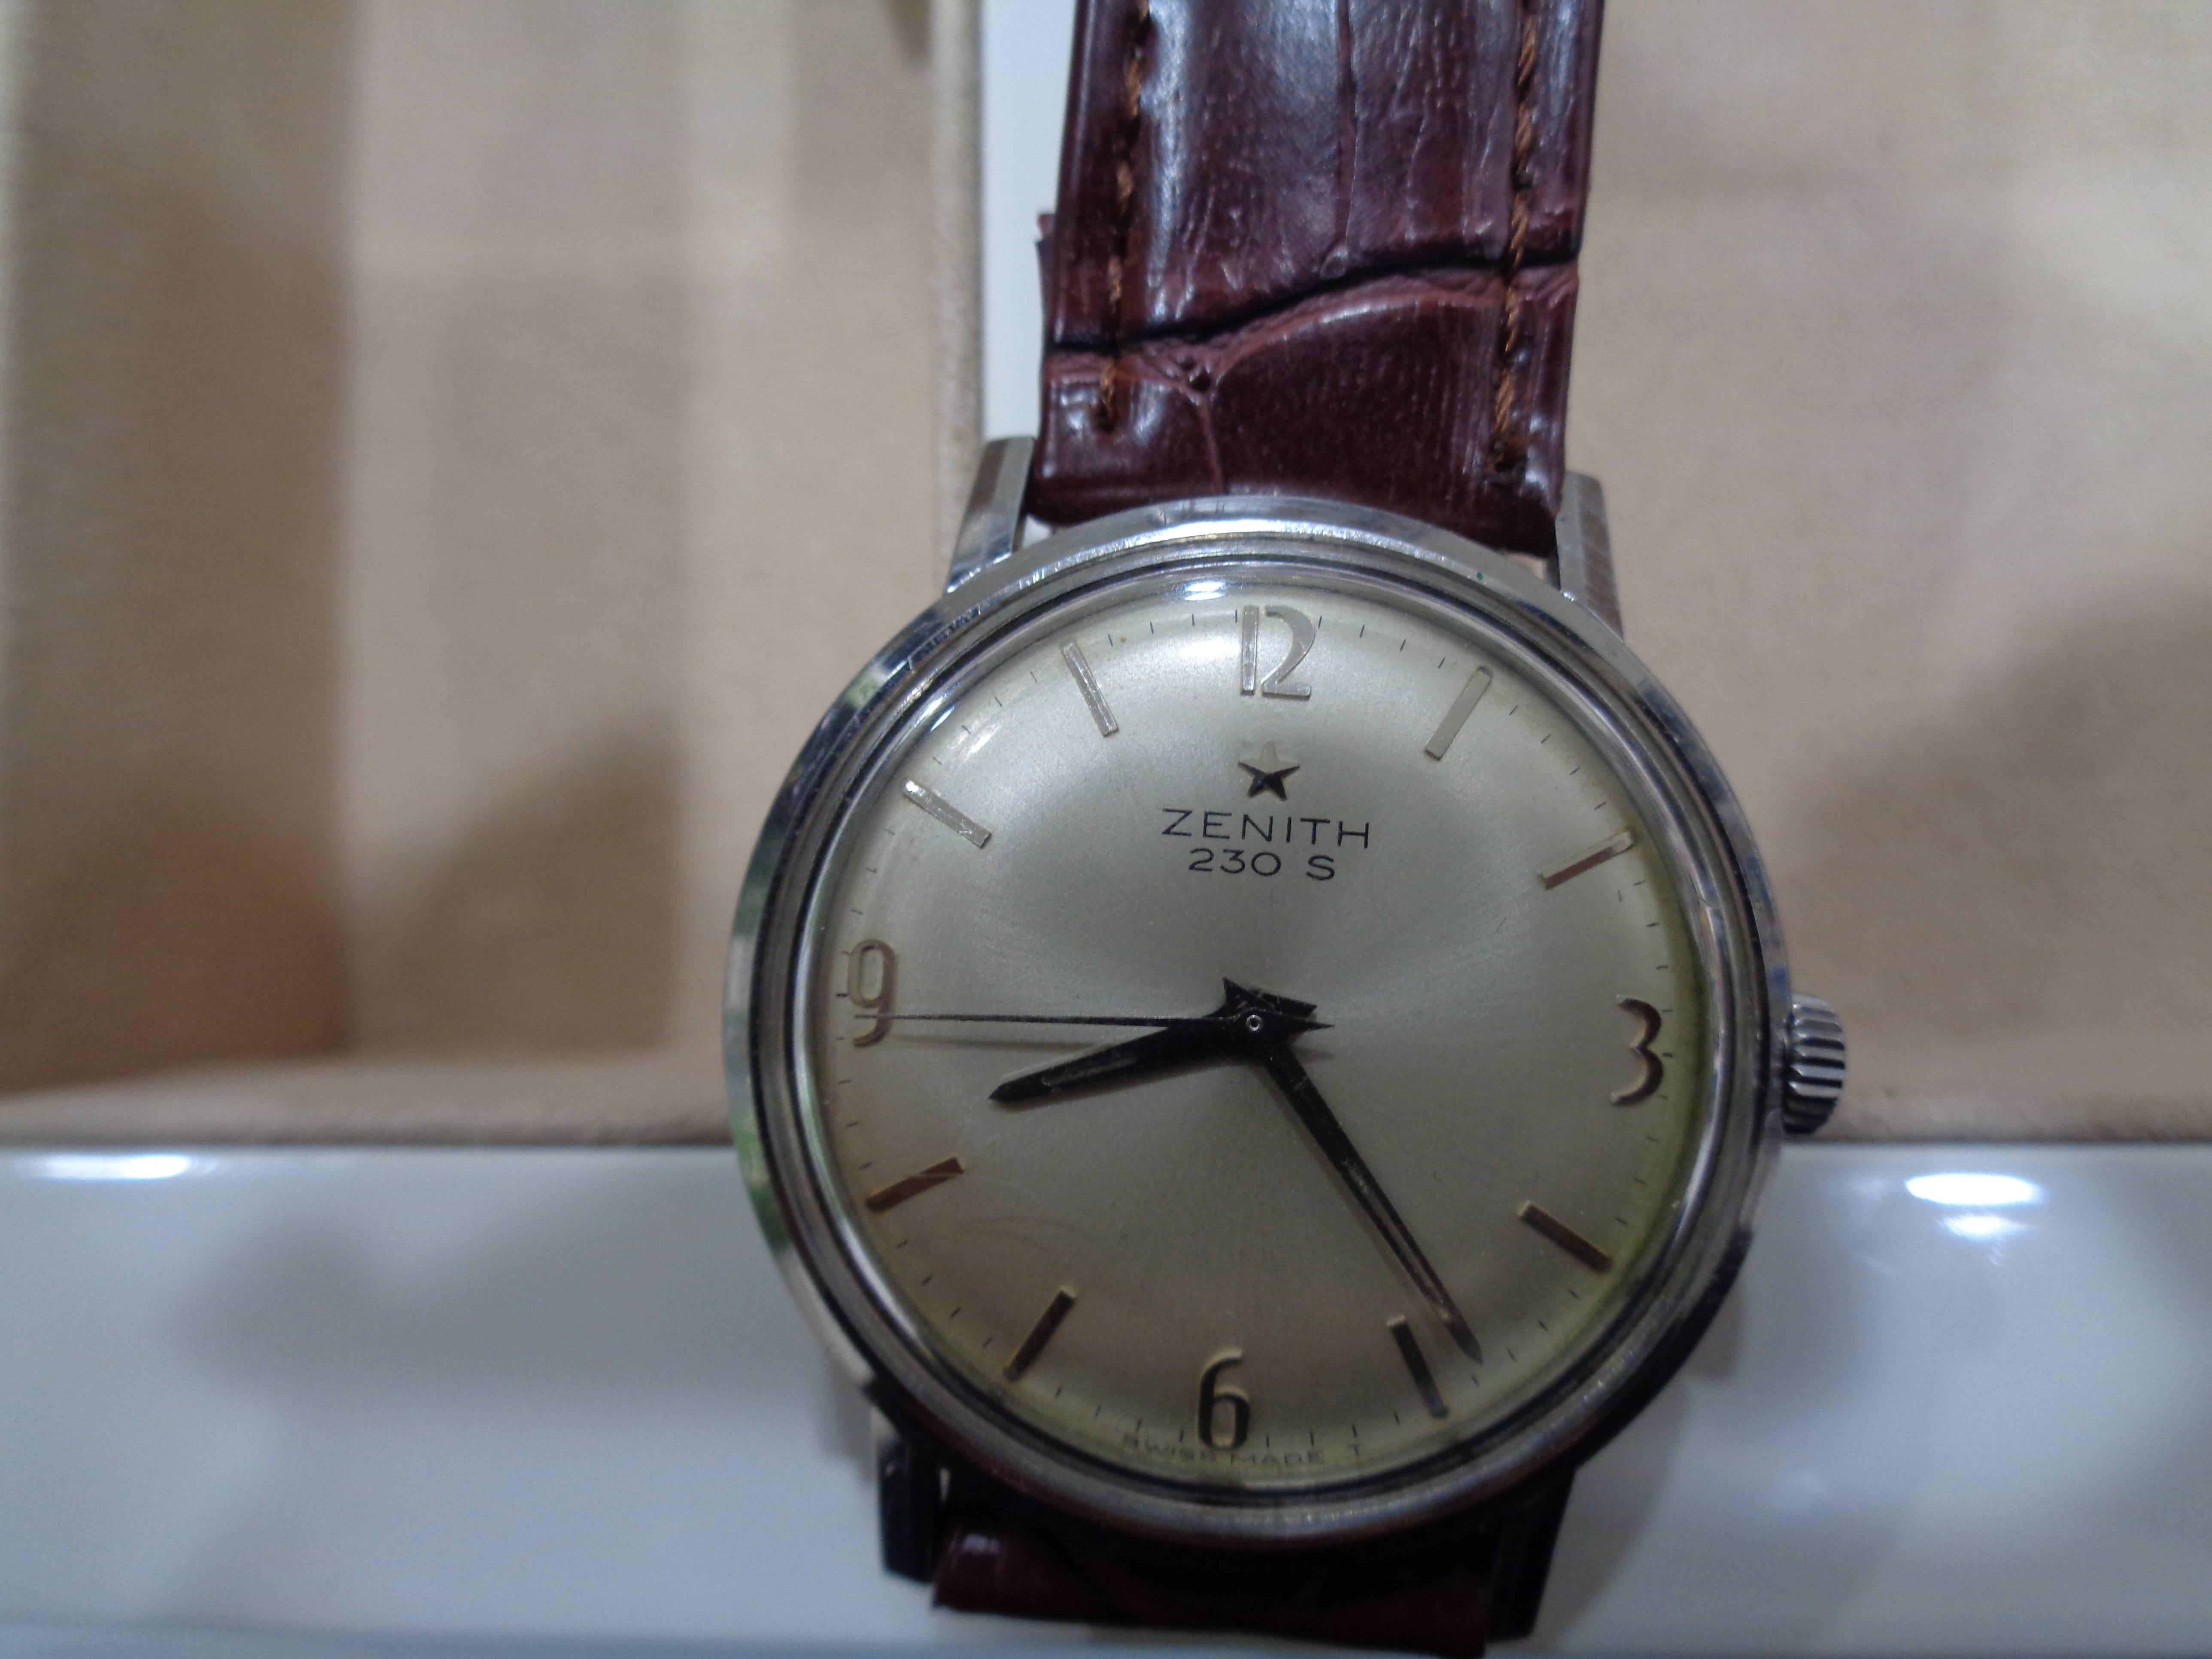 Zenith 230s Watch

brown watchband

silver tone